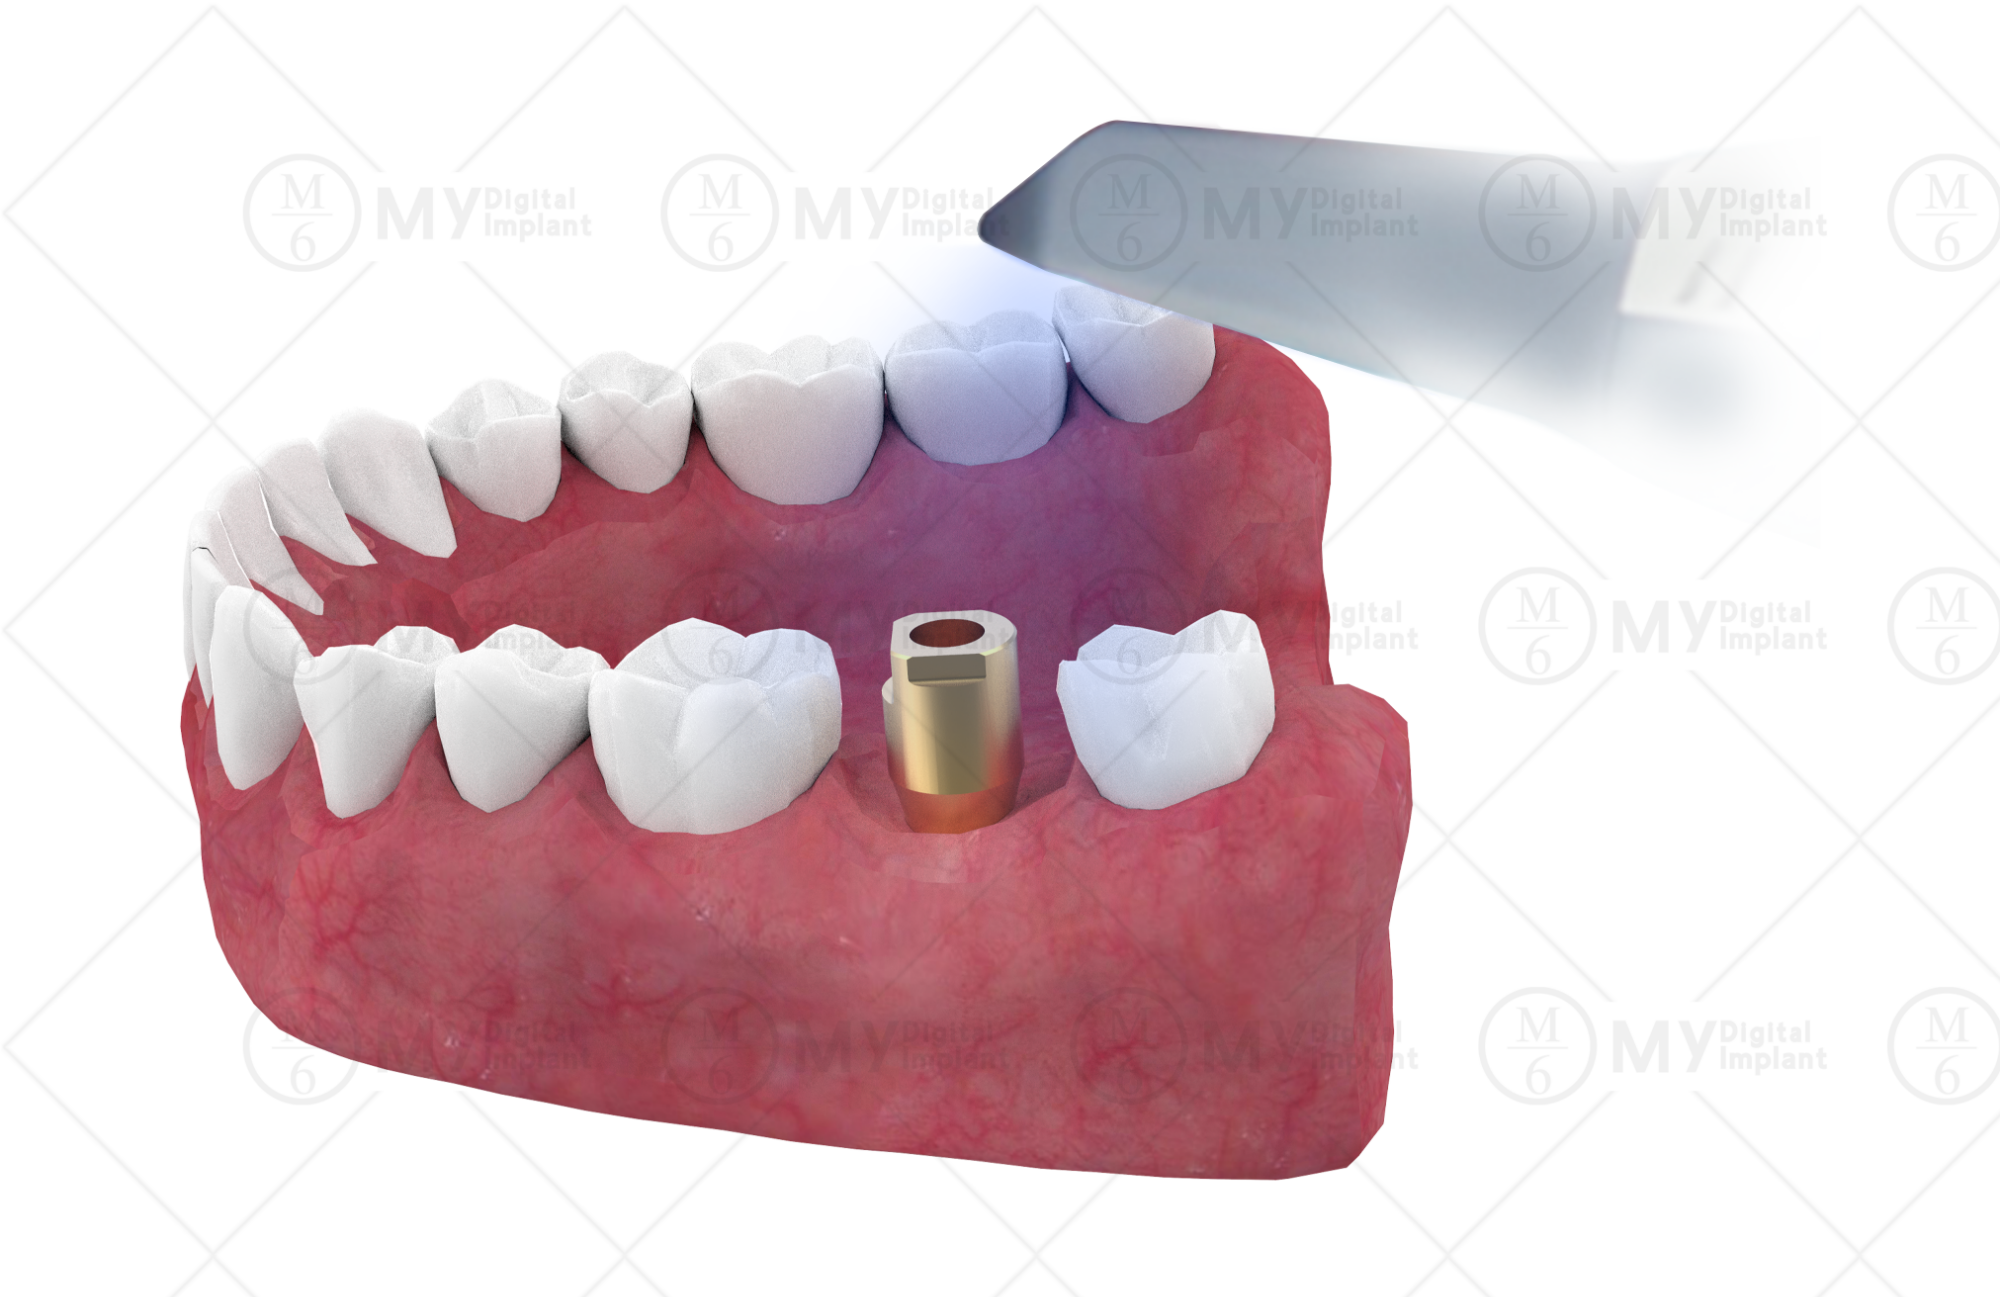 dental impression taking with intra oral scanner